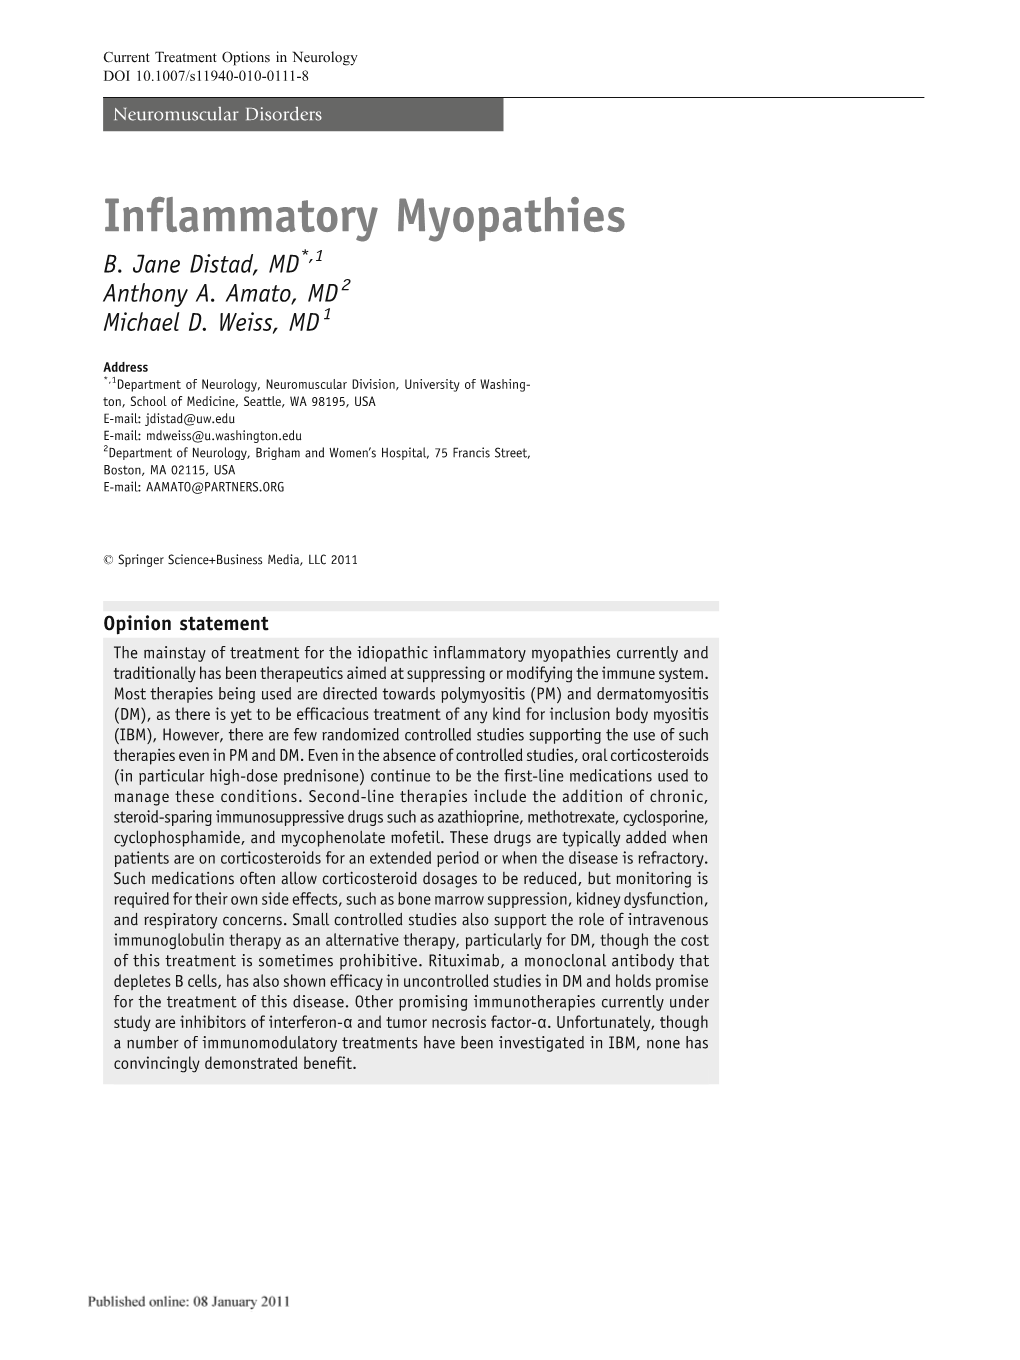 Inflammatory Myopathies B